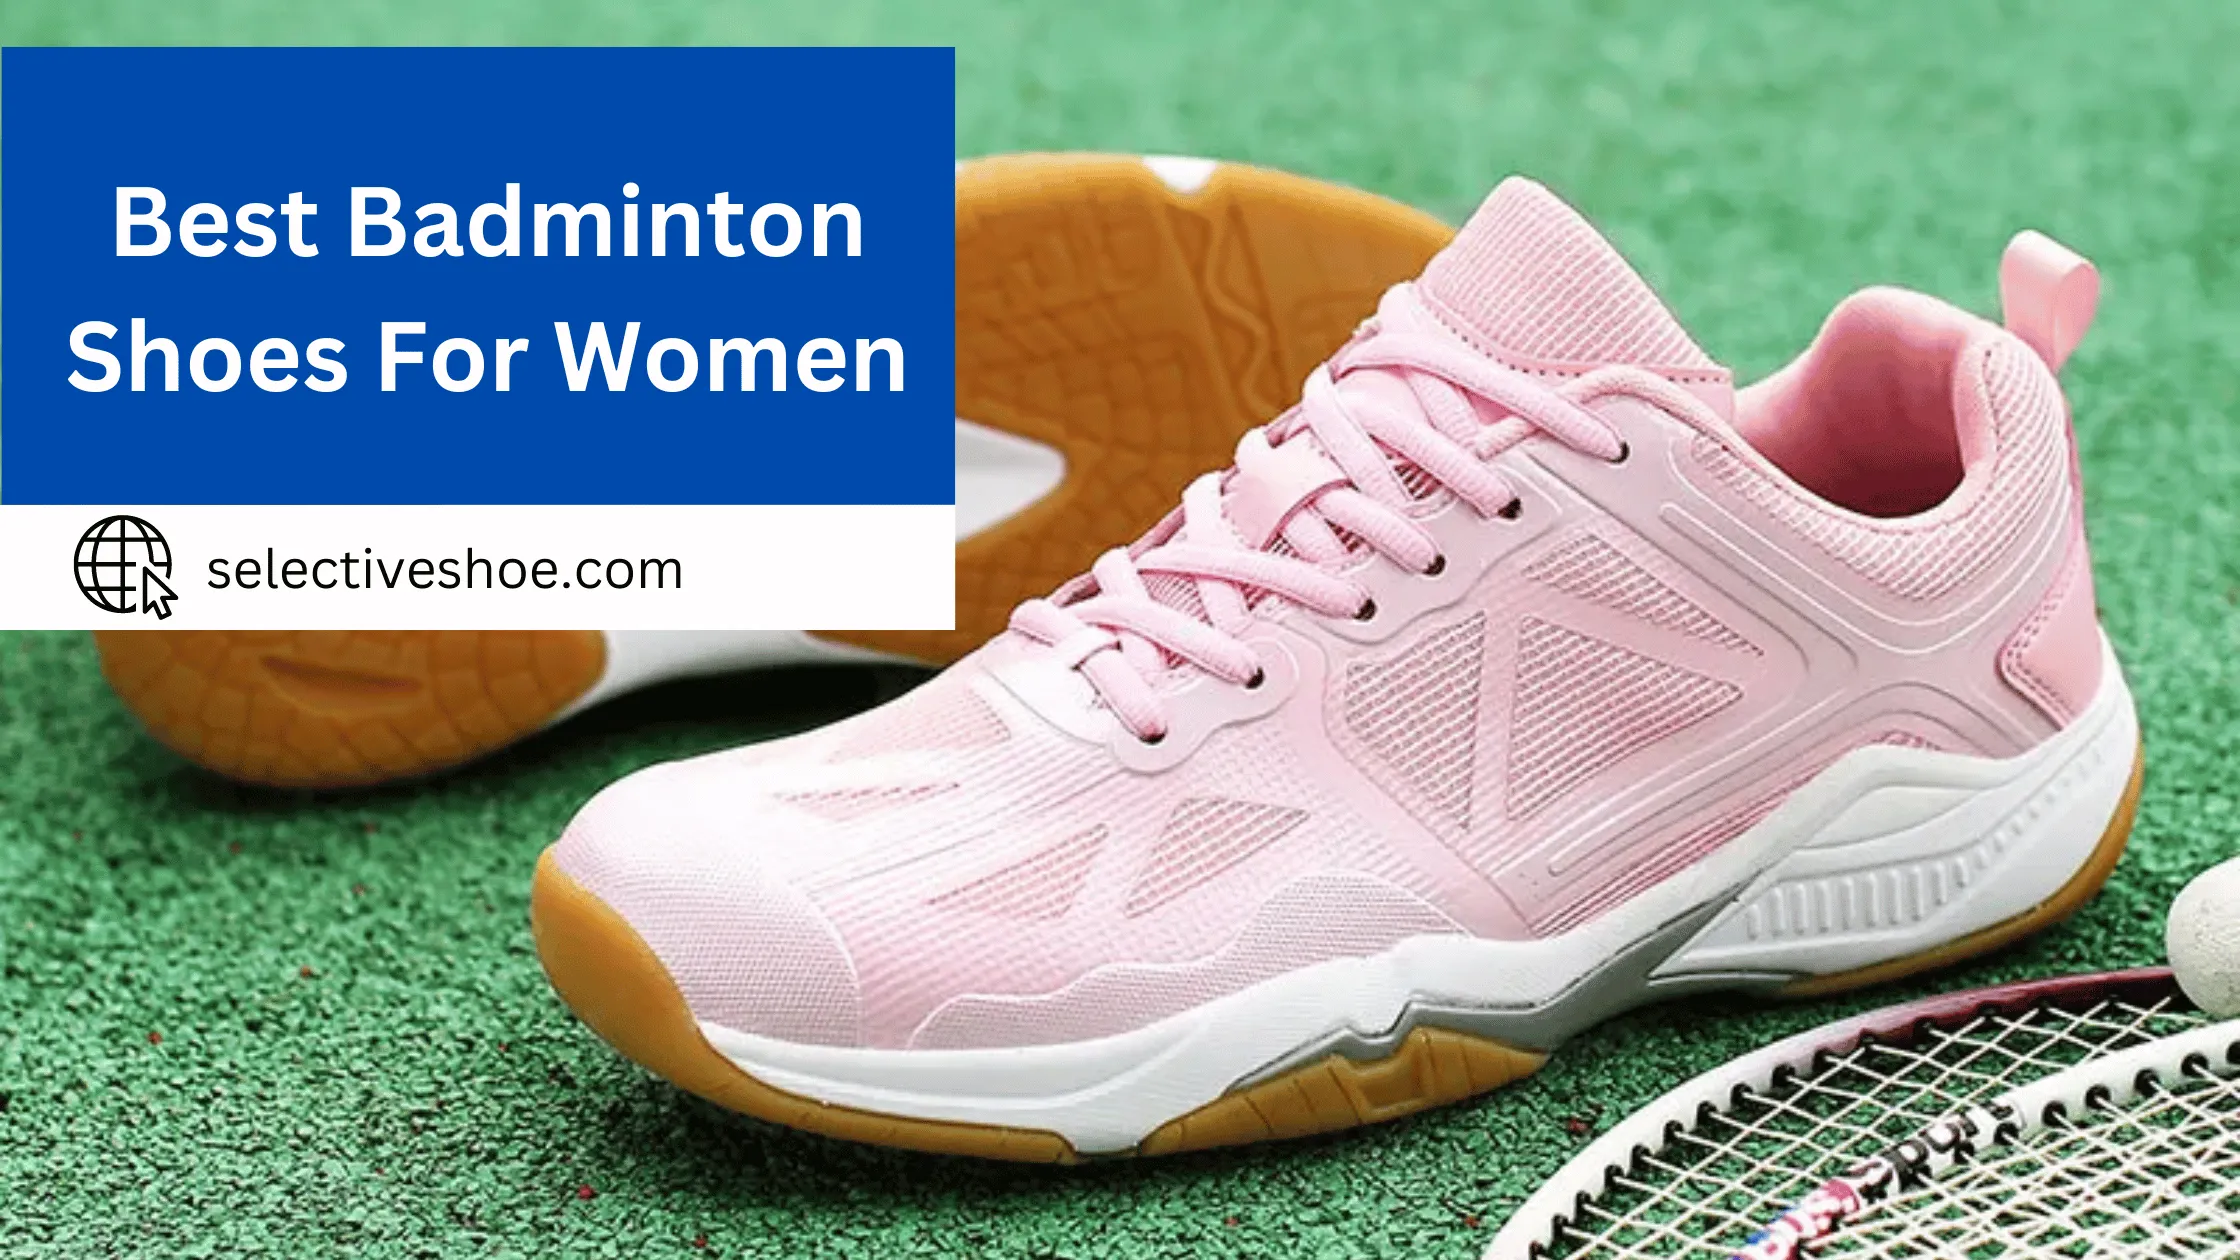 Best Badminton Shoes For Women - Comprehensive Guide